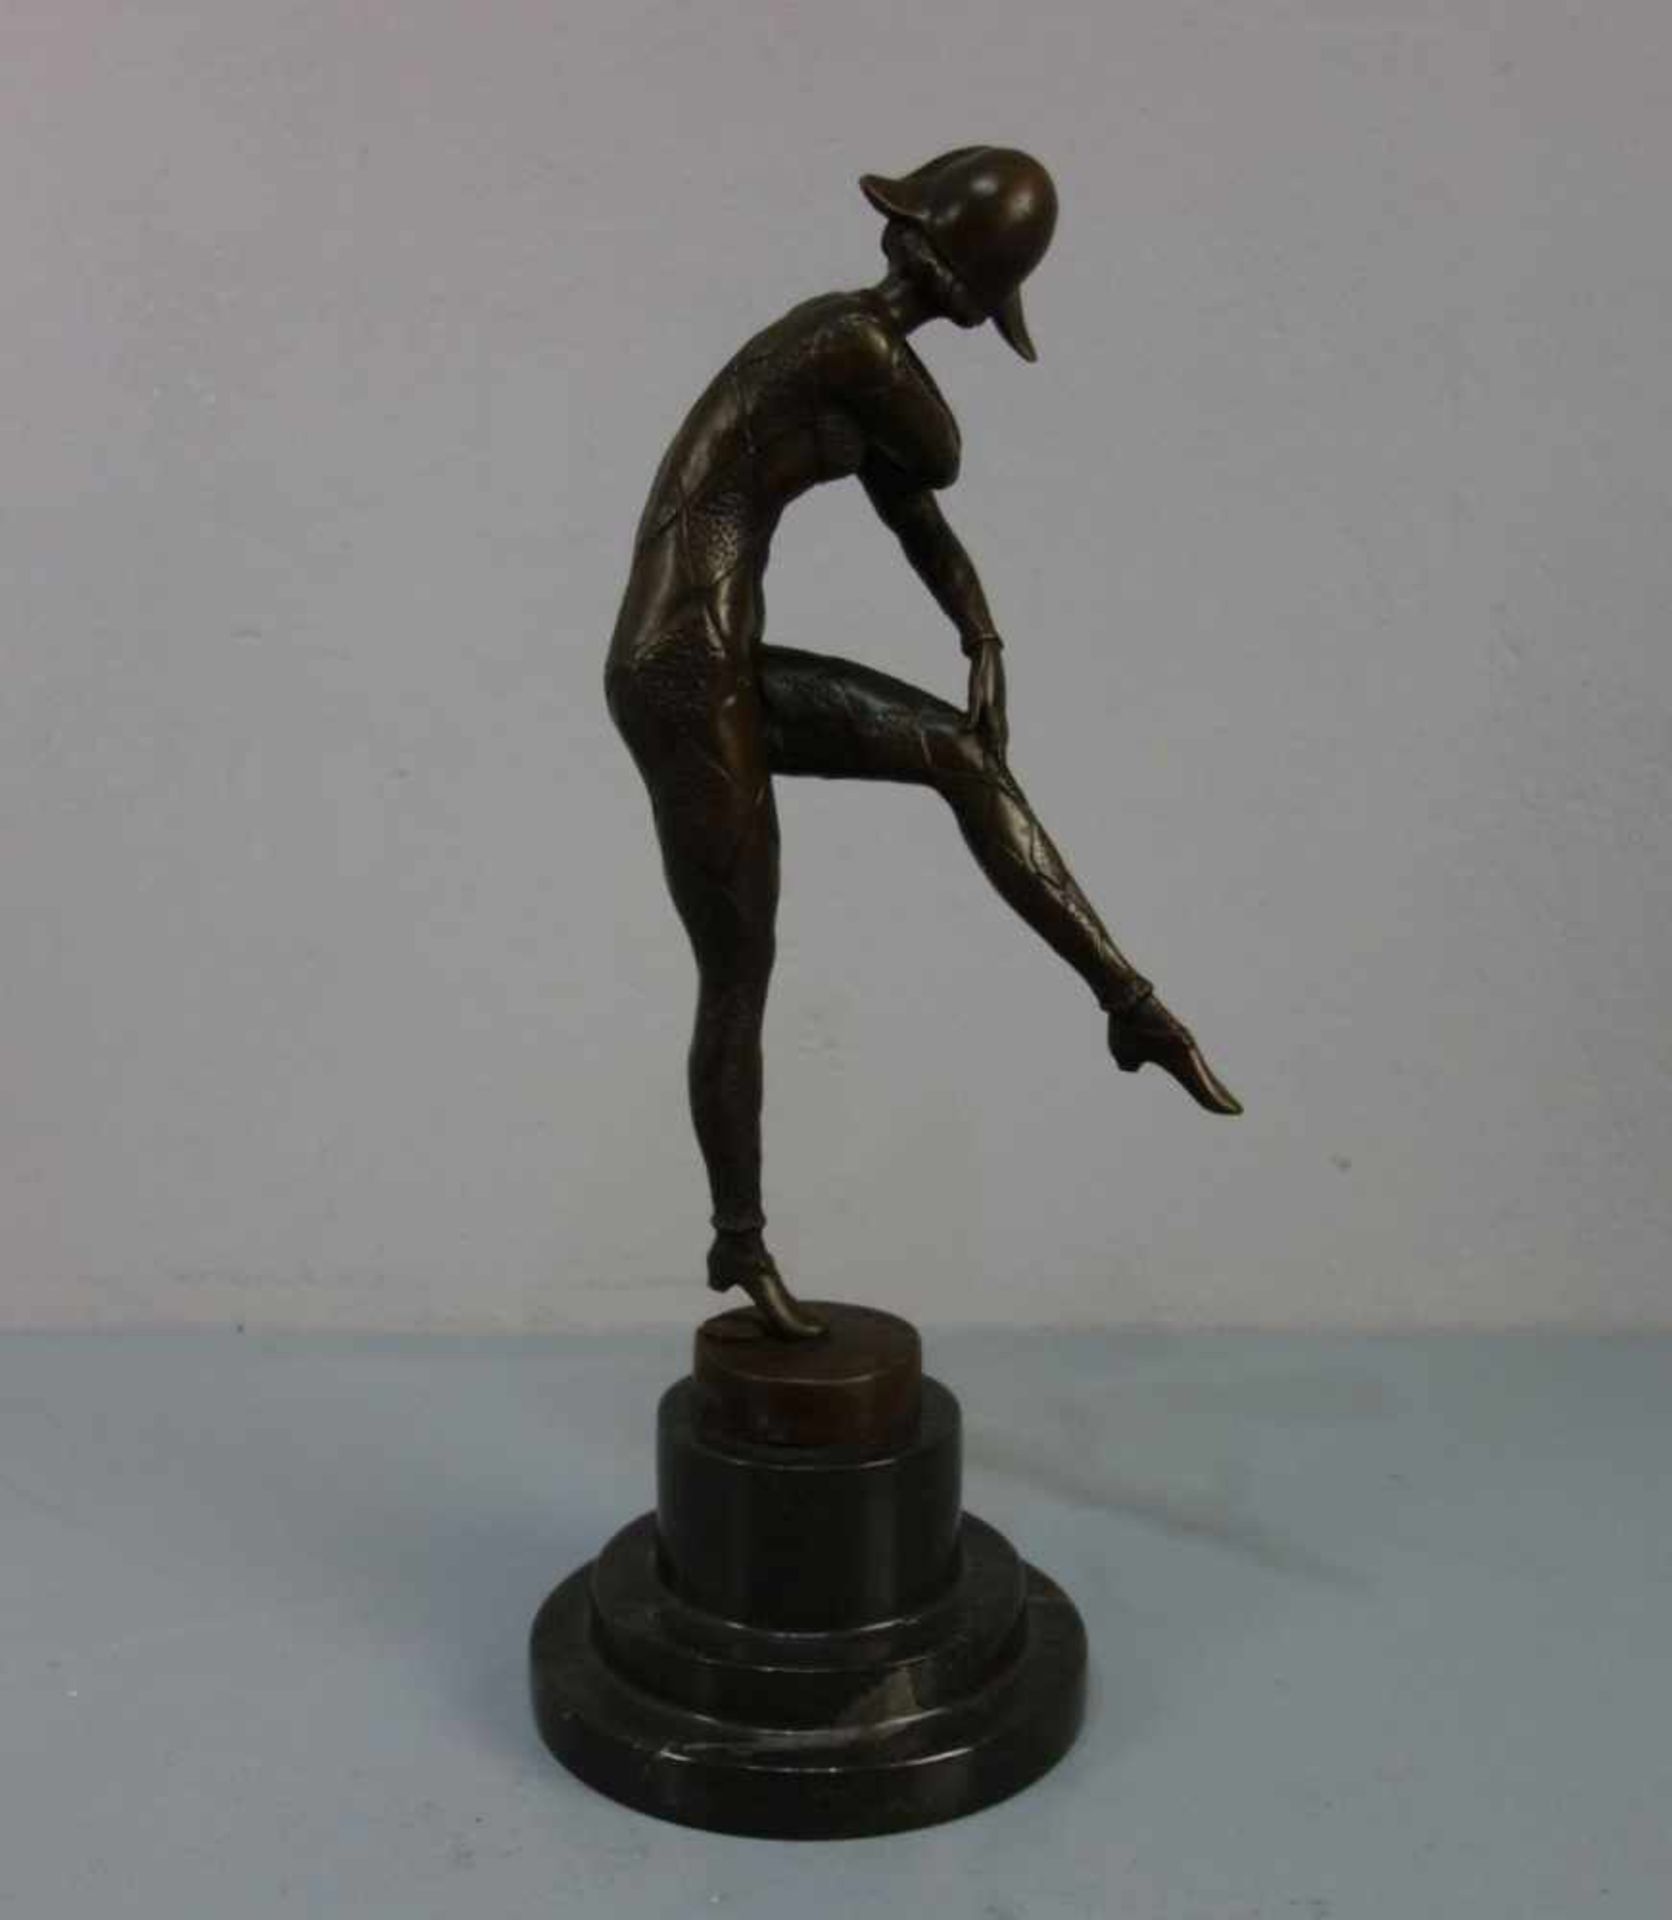 nach CHIPARUS, DÉMETRE HARALAMB (1886-1947), Skulptur / sculpture: "Weiblicher Harlekin", 20. Jh., - Image 3 of 4